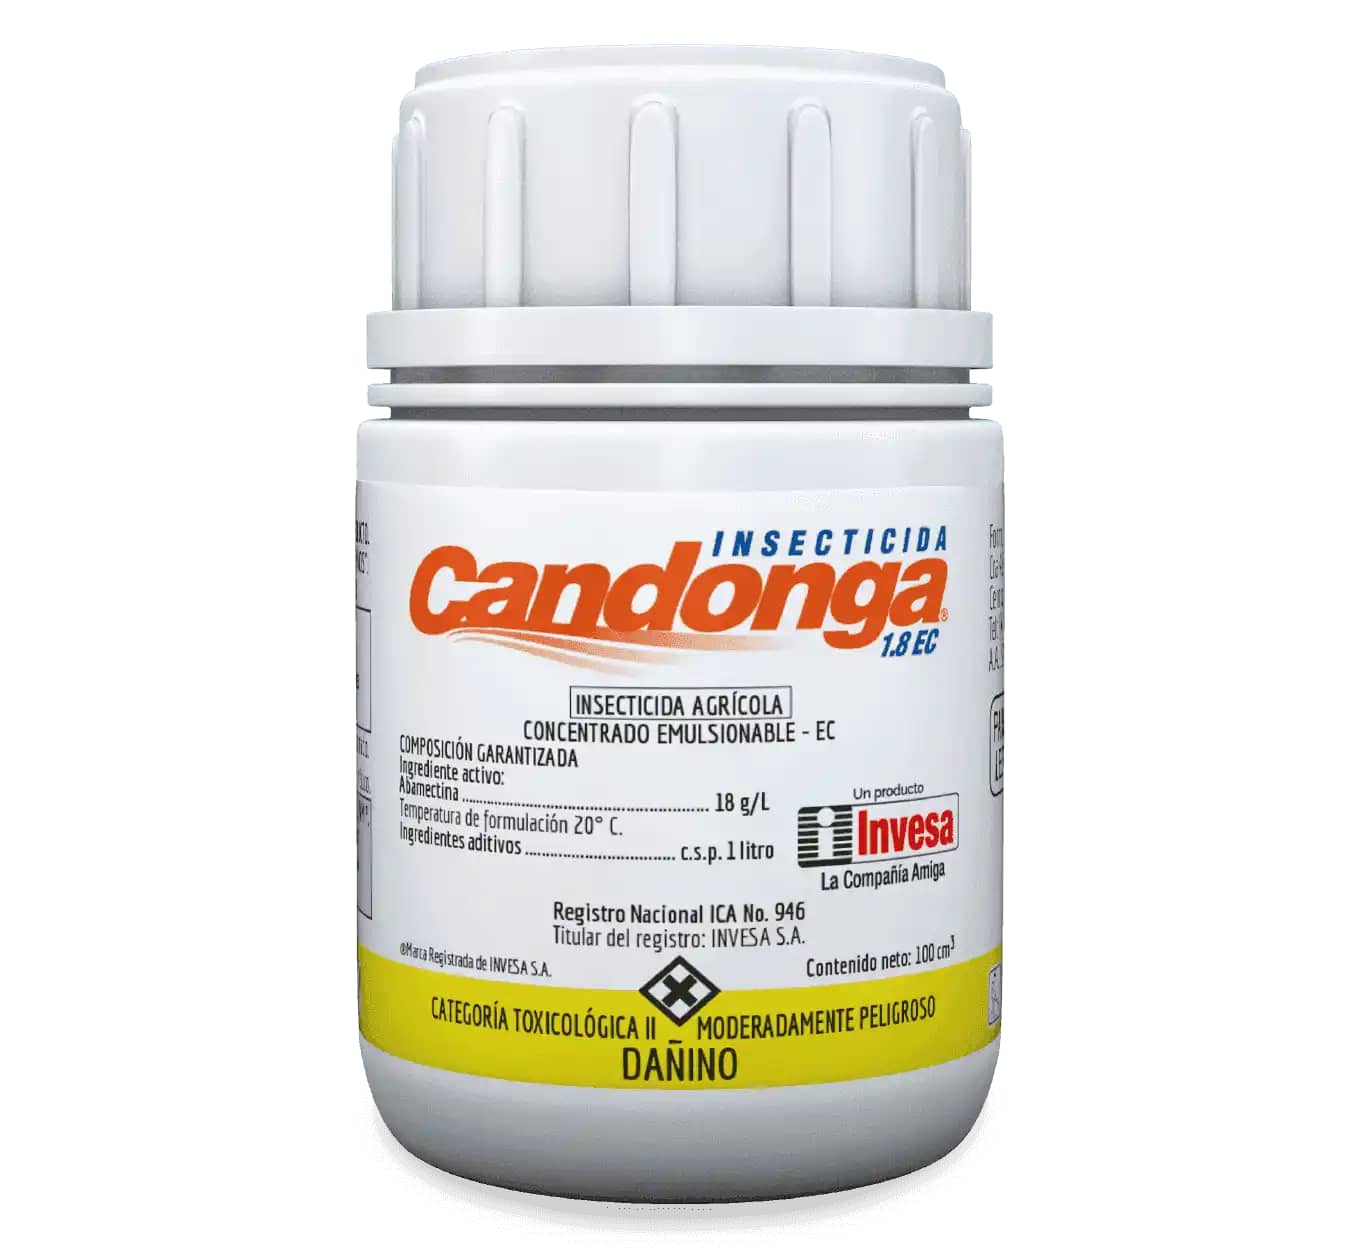 Insecticida Candonga 1.8 Ec x 100 cm³